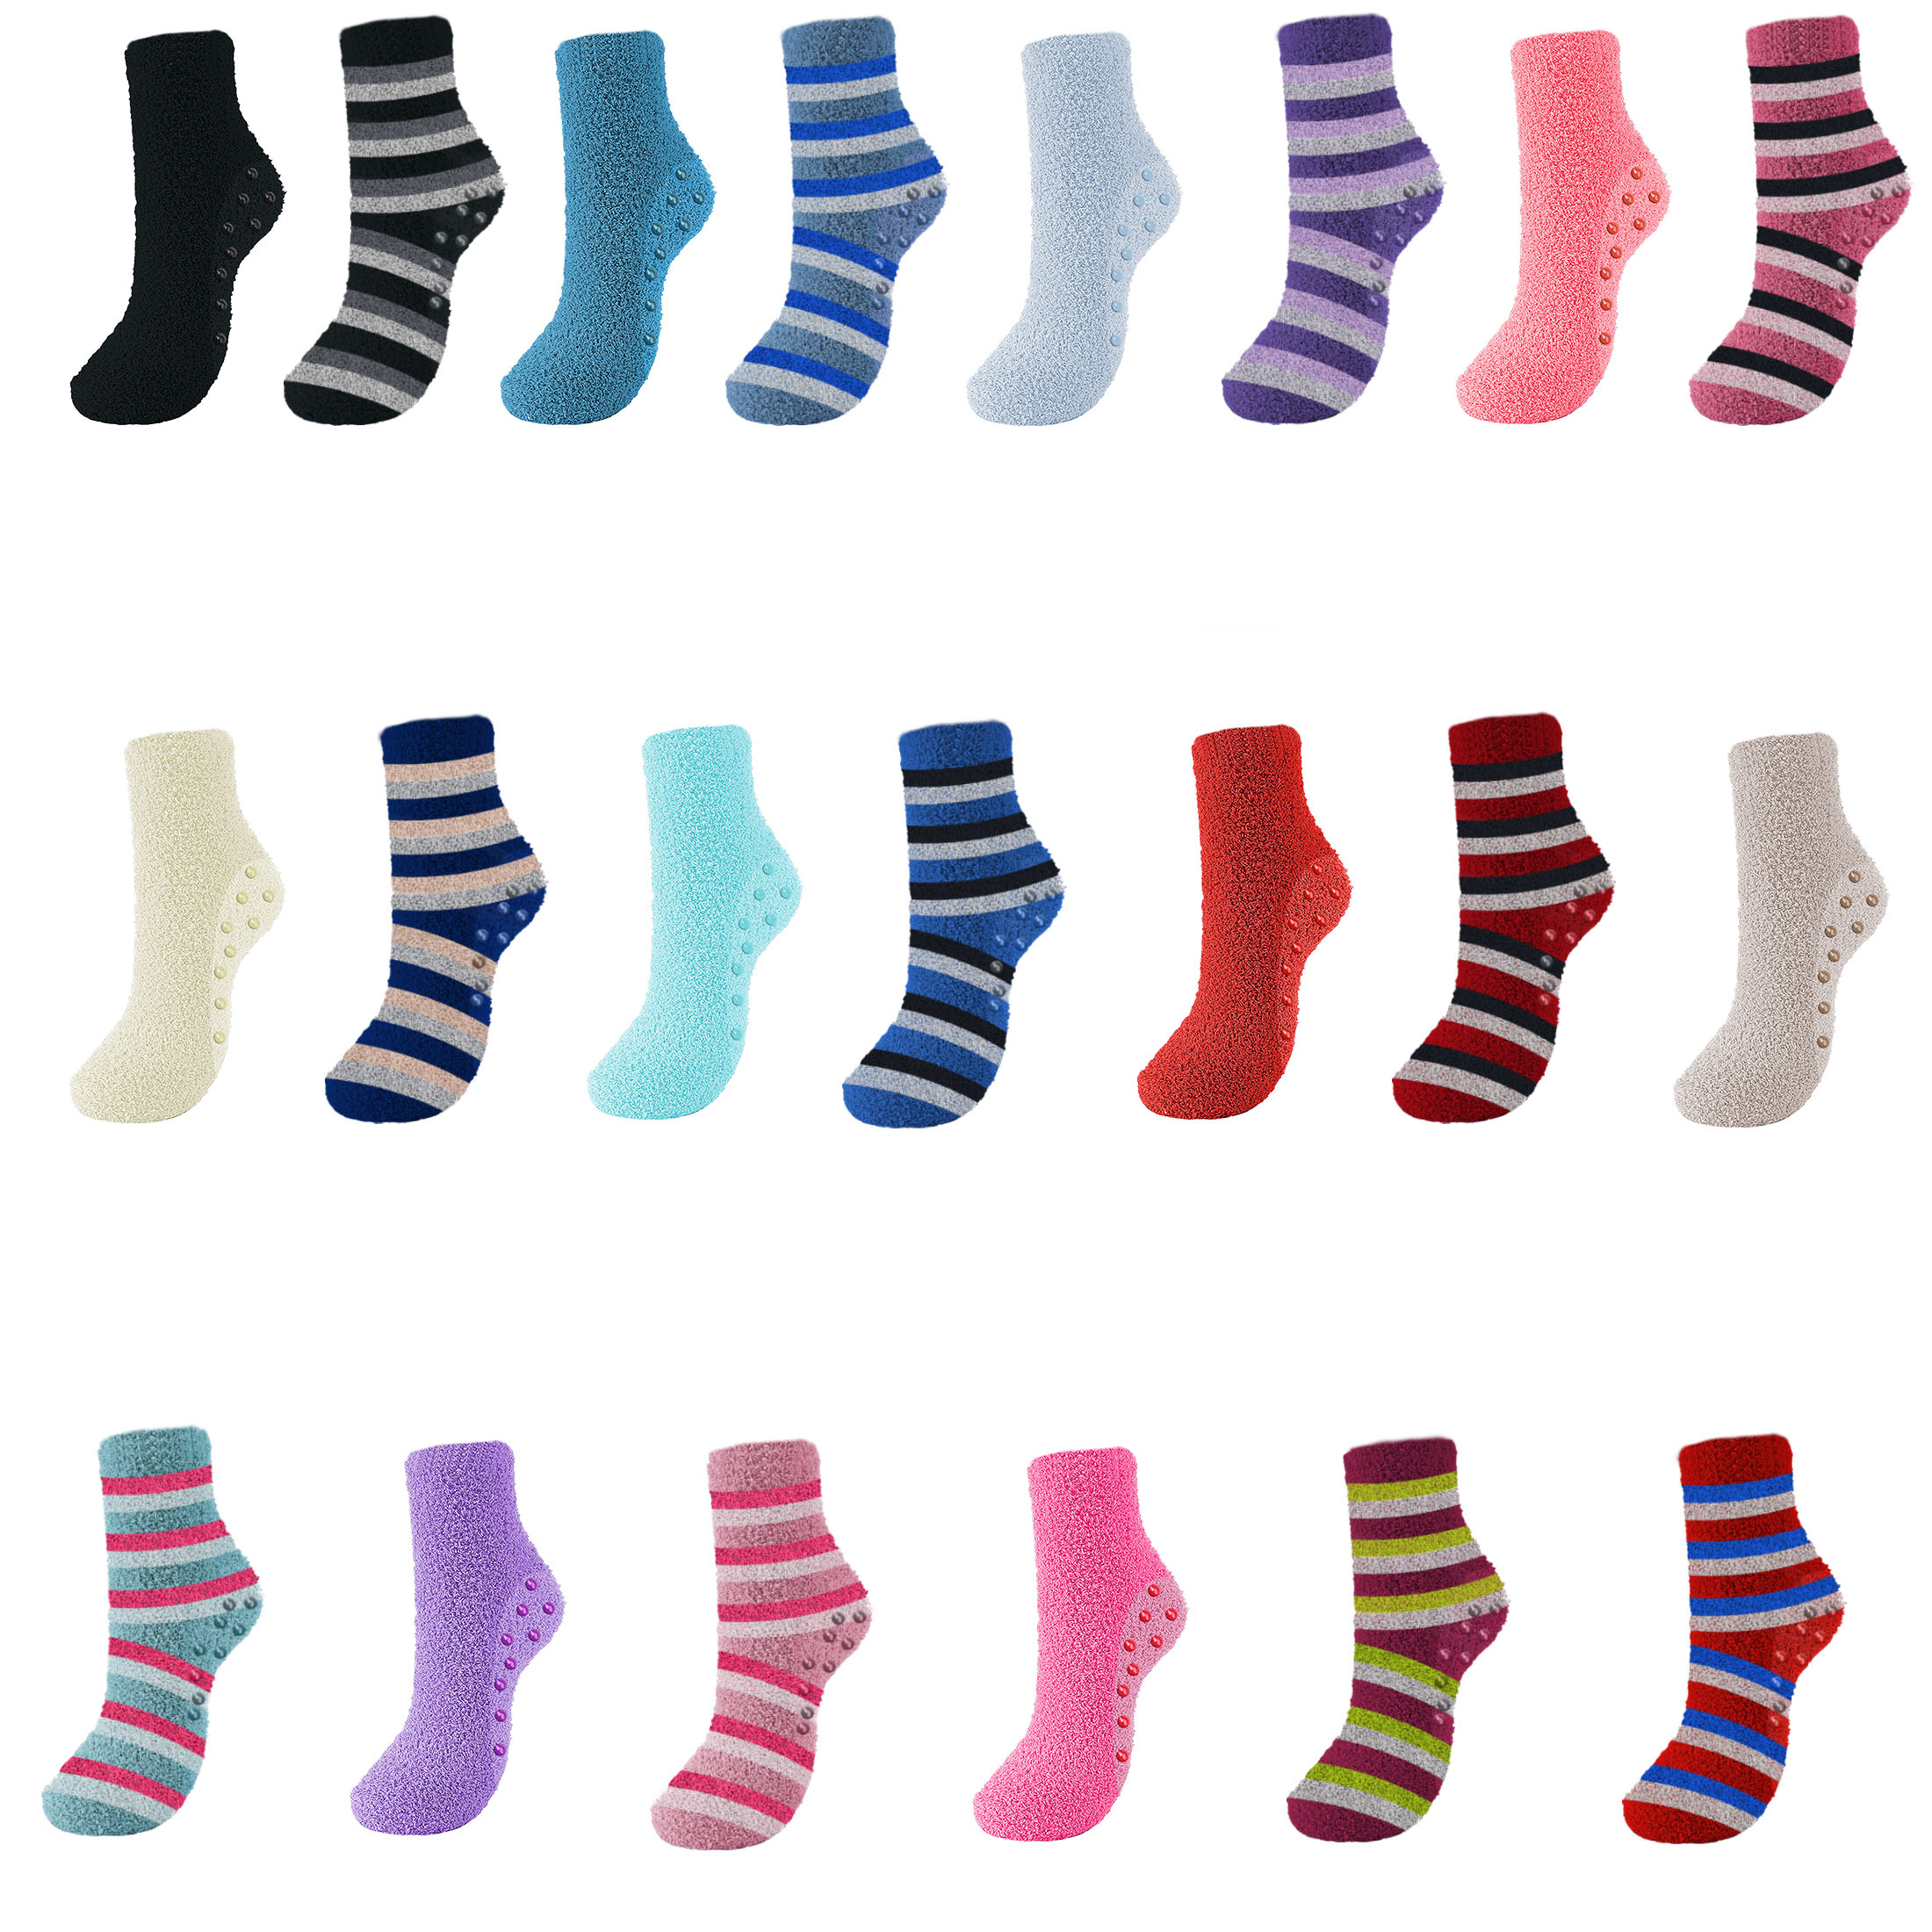 4-Pairs: Women's Non-Slip Warm Soft Fluffy Cozy Fuzzy Plush Socks For Winter - Solid & Striped